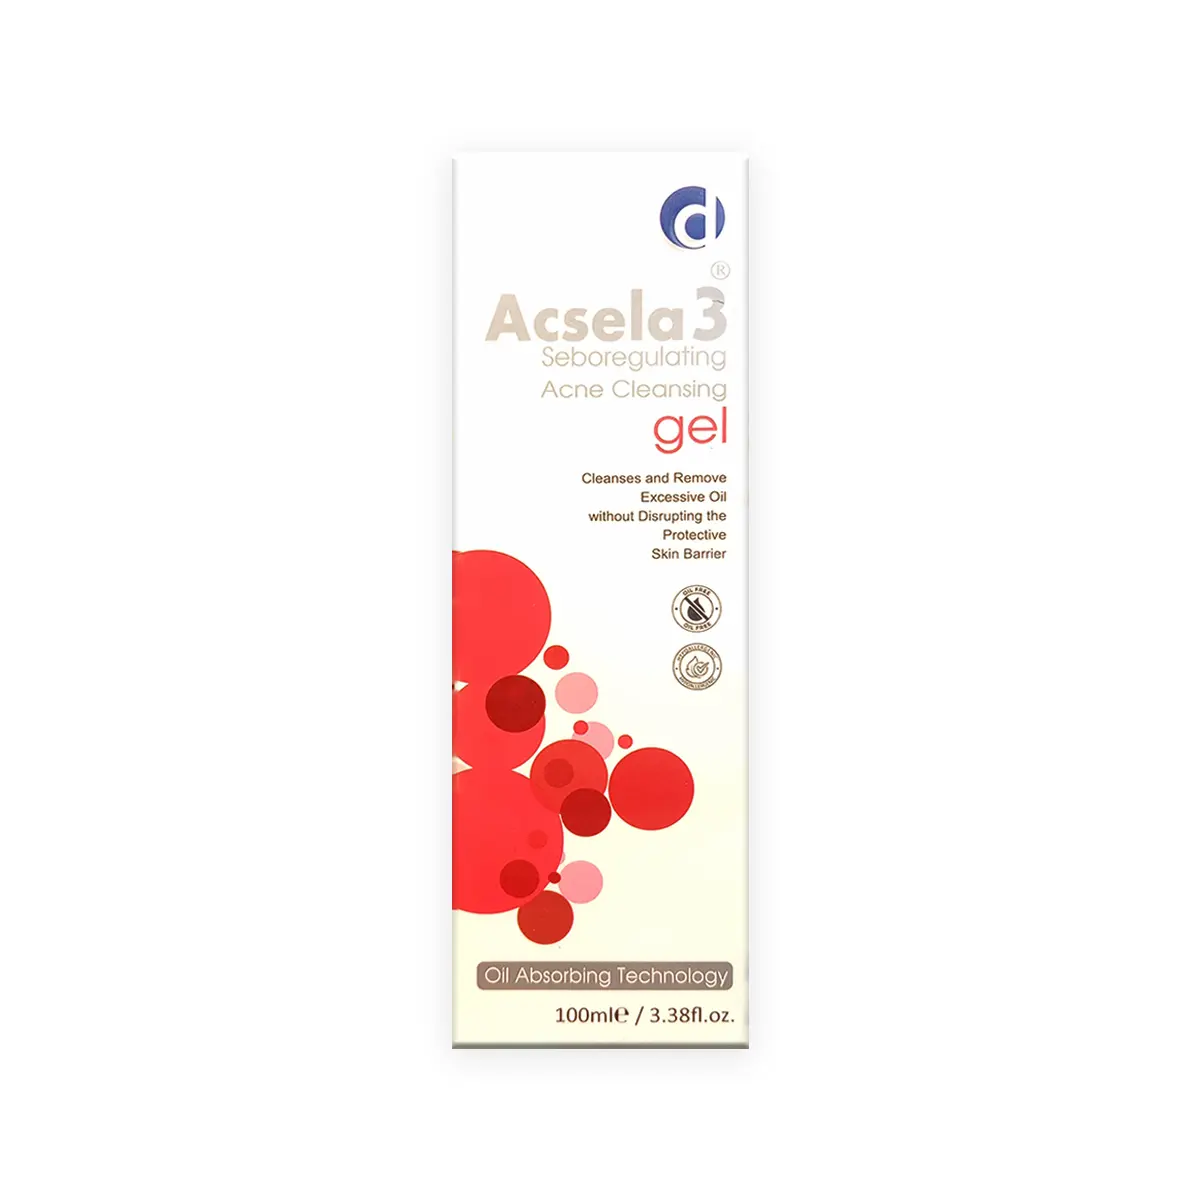 Acsela 3 Seboregulating Acne Cleansing Gel 100ml